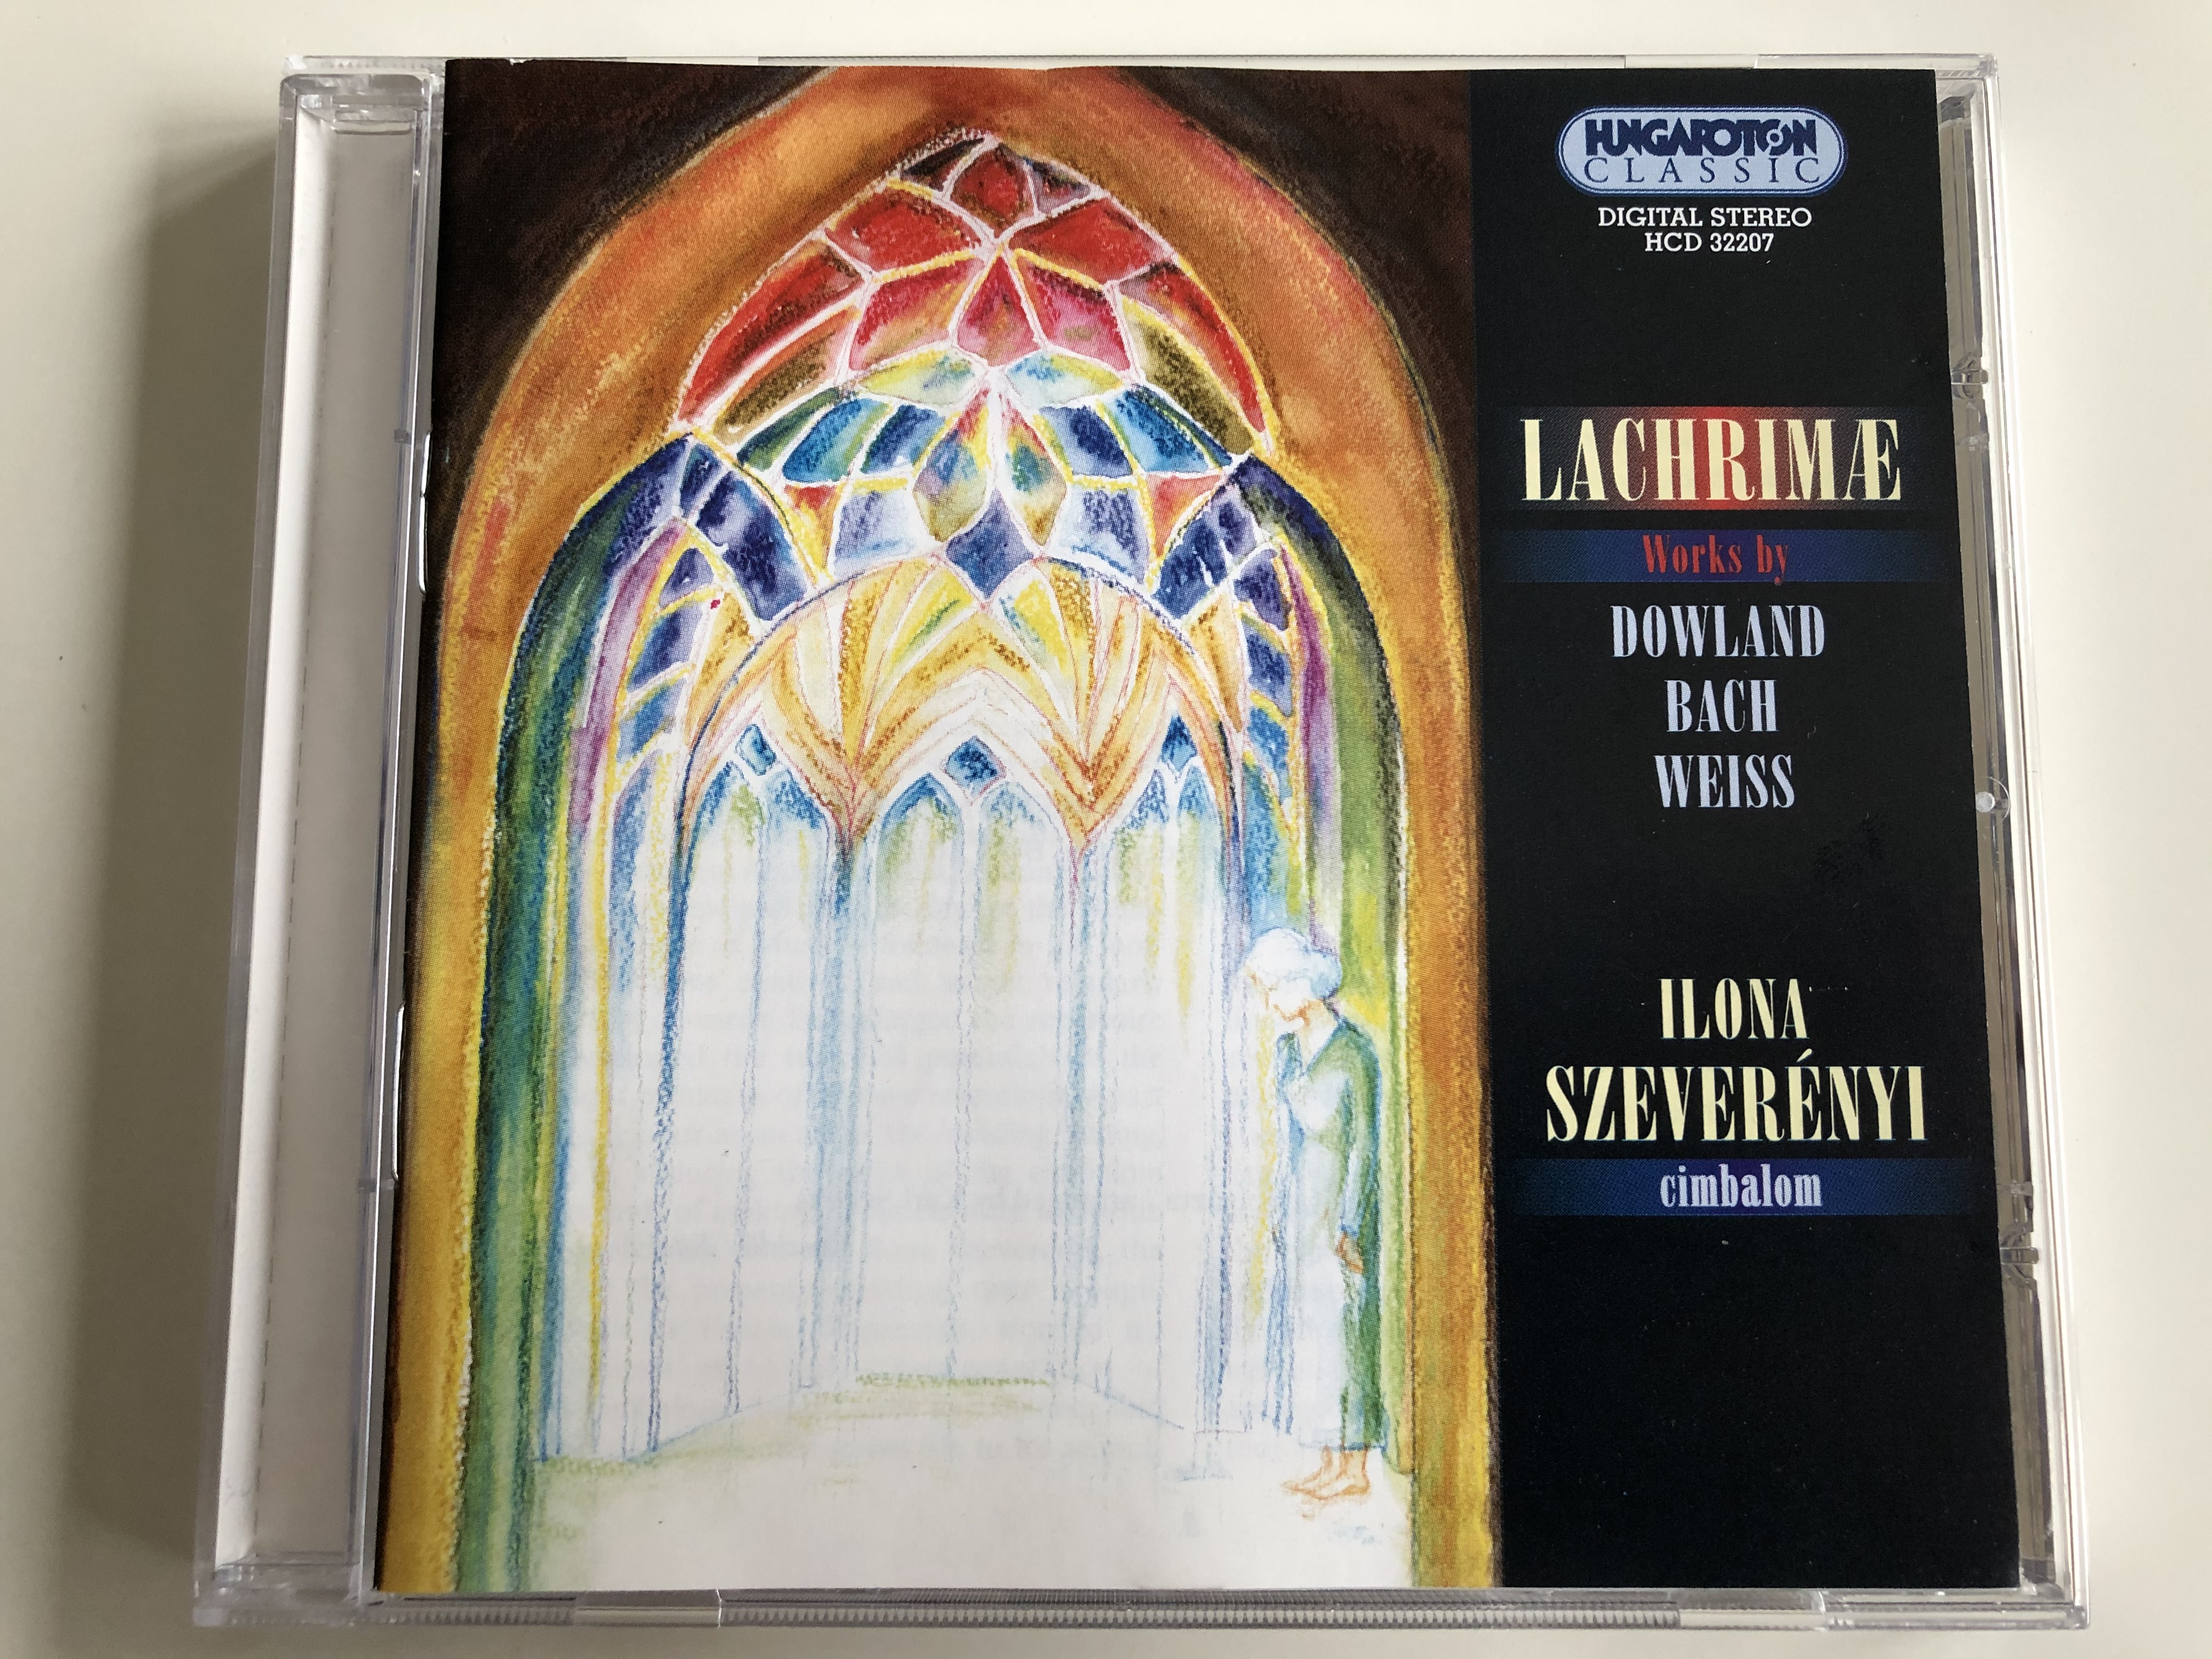 lachrime-works-by-dowland-bach-weiss-cimbalom-ilona-szeverenyi-hungaroton-classic-audio-cd-2003-stereo-hcd-32207-1-.jpg